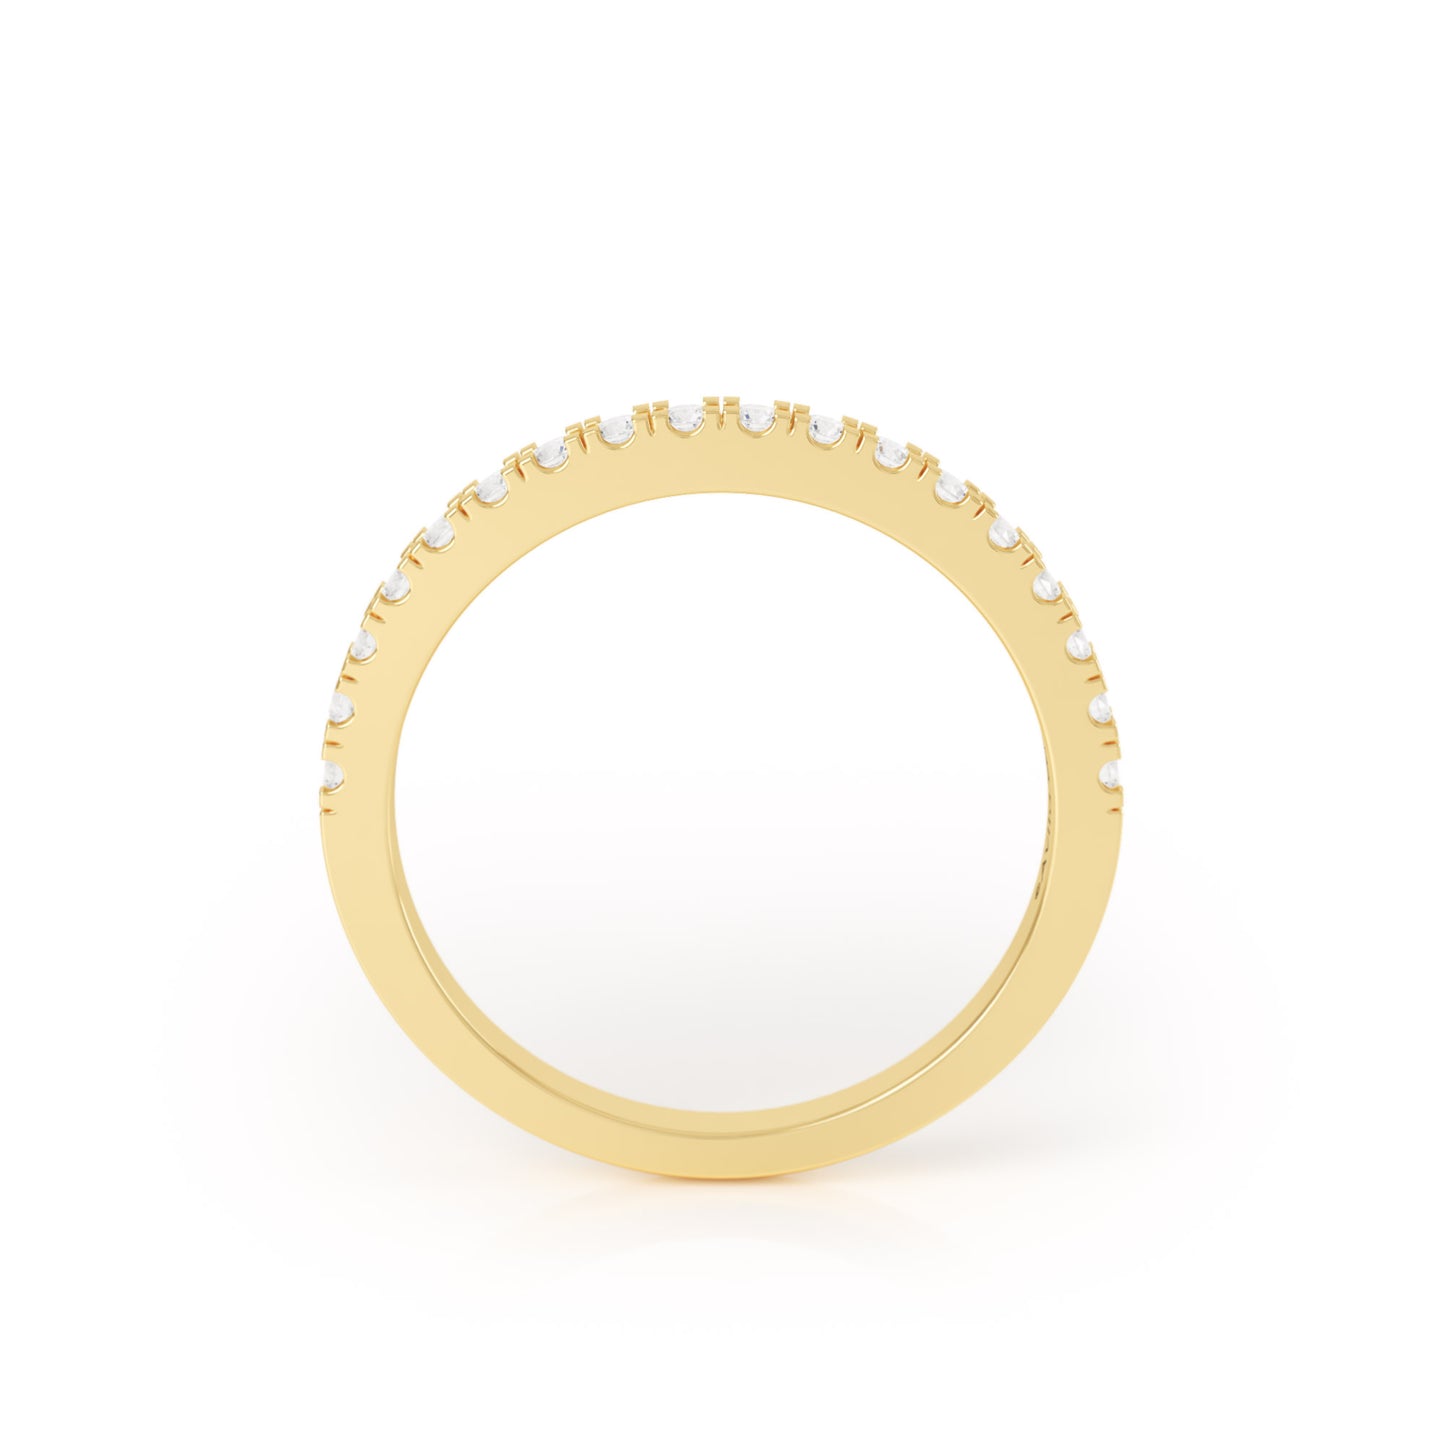 SYNERGI unisex Diamond Eternity Ring in 18k Yellow Gold